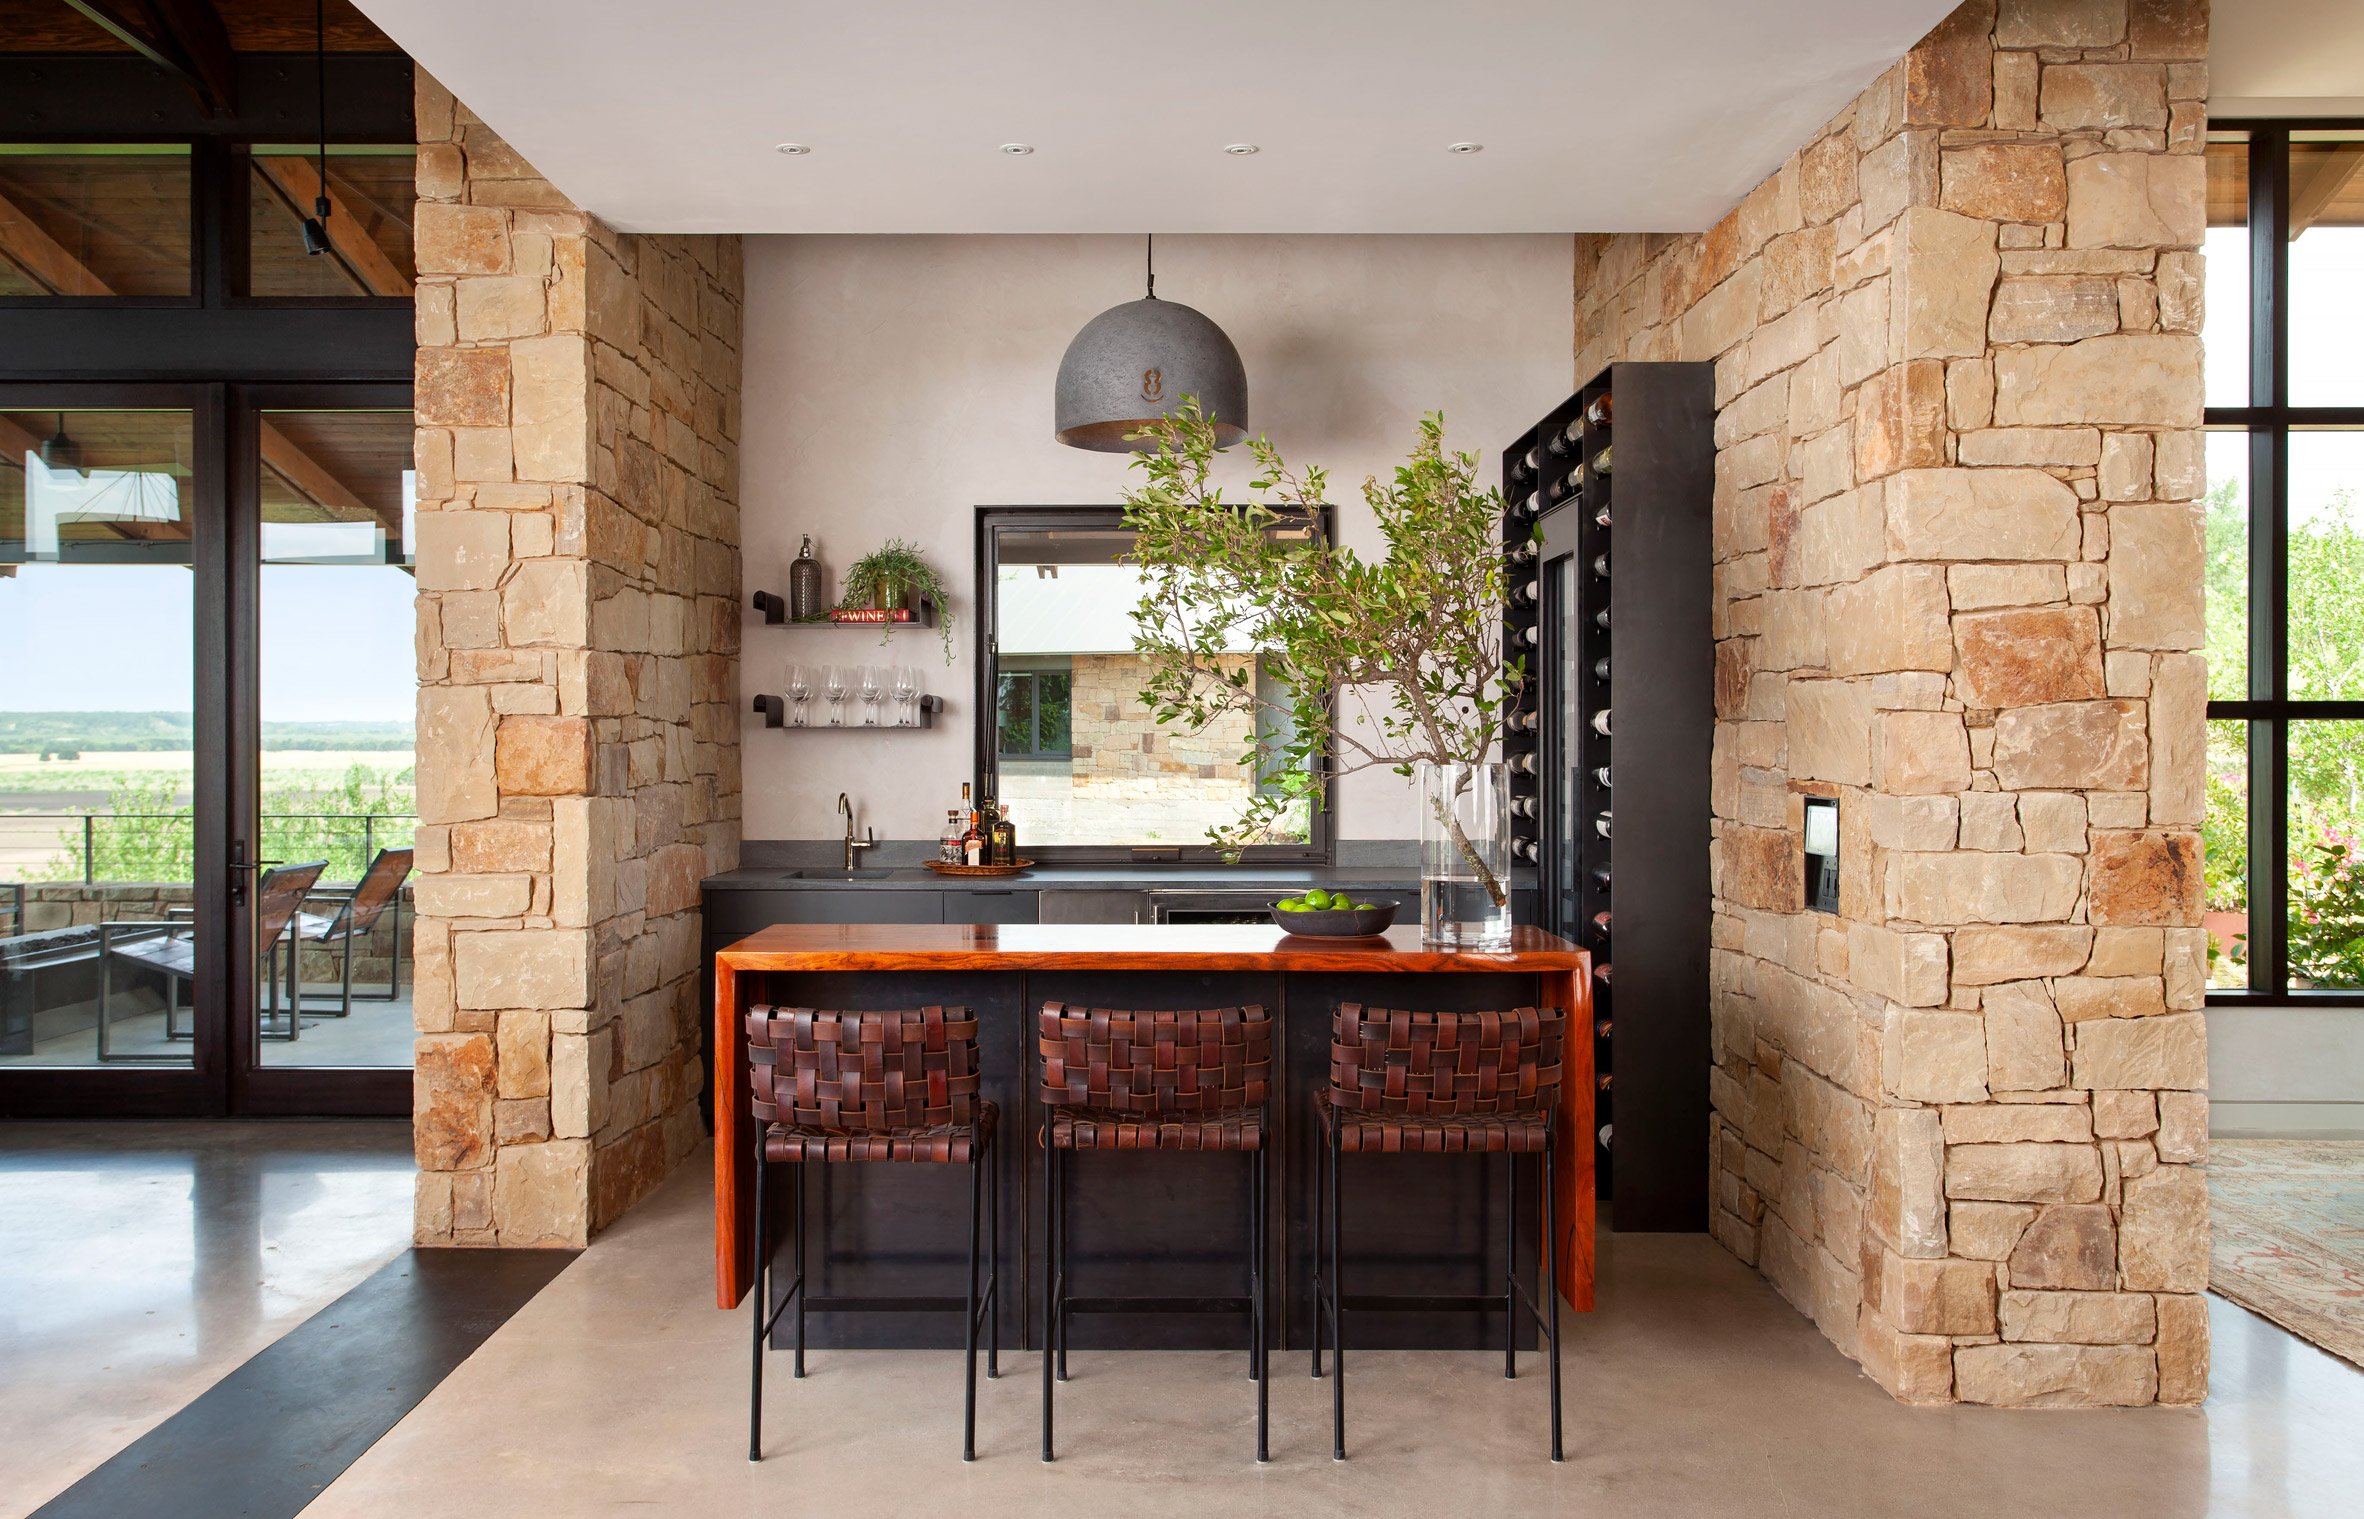 Kitchen by Sanders Architecture